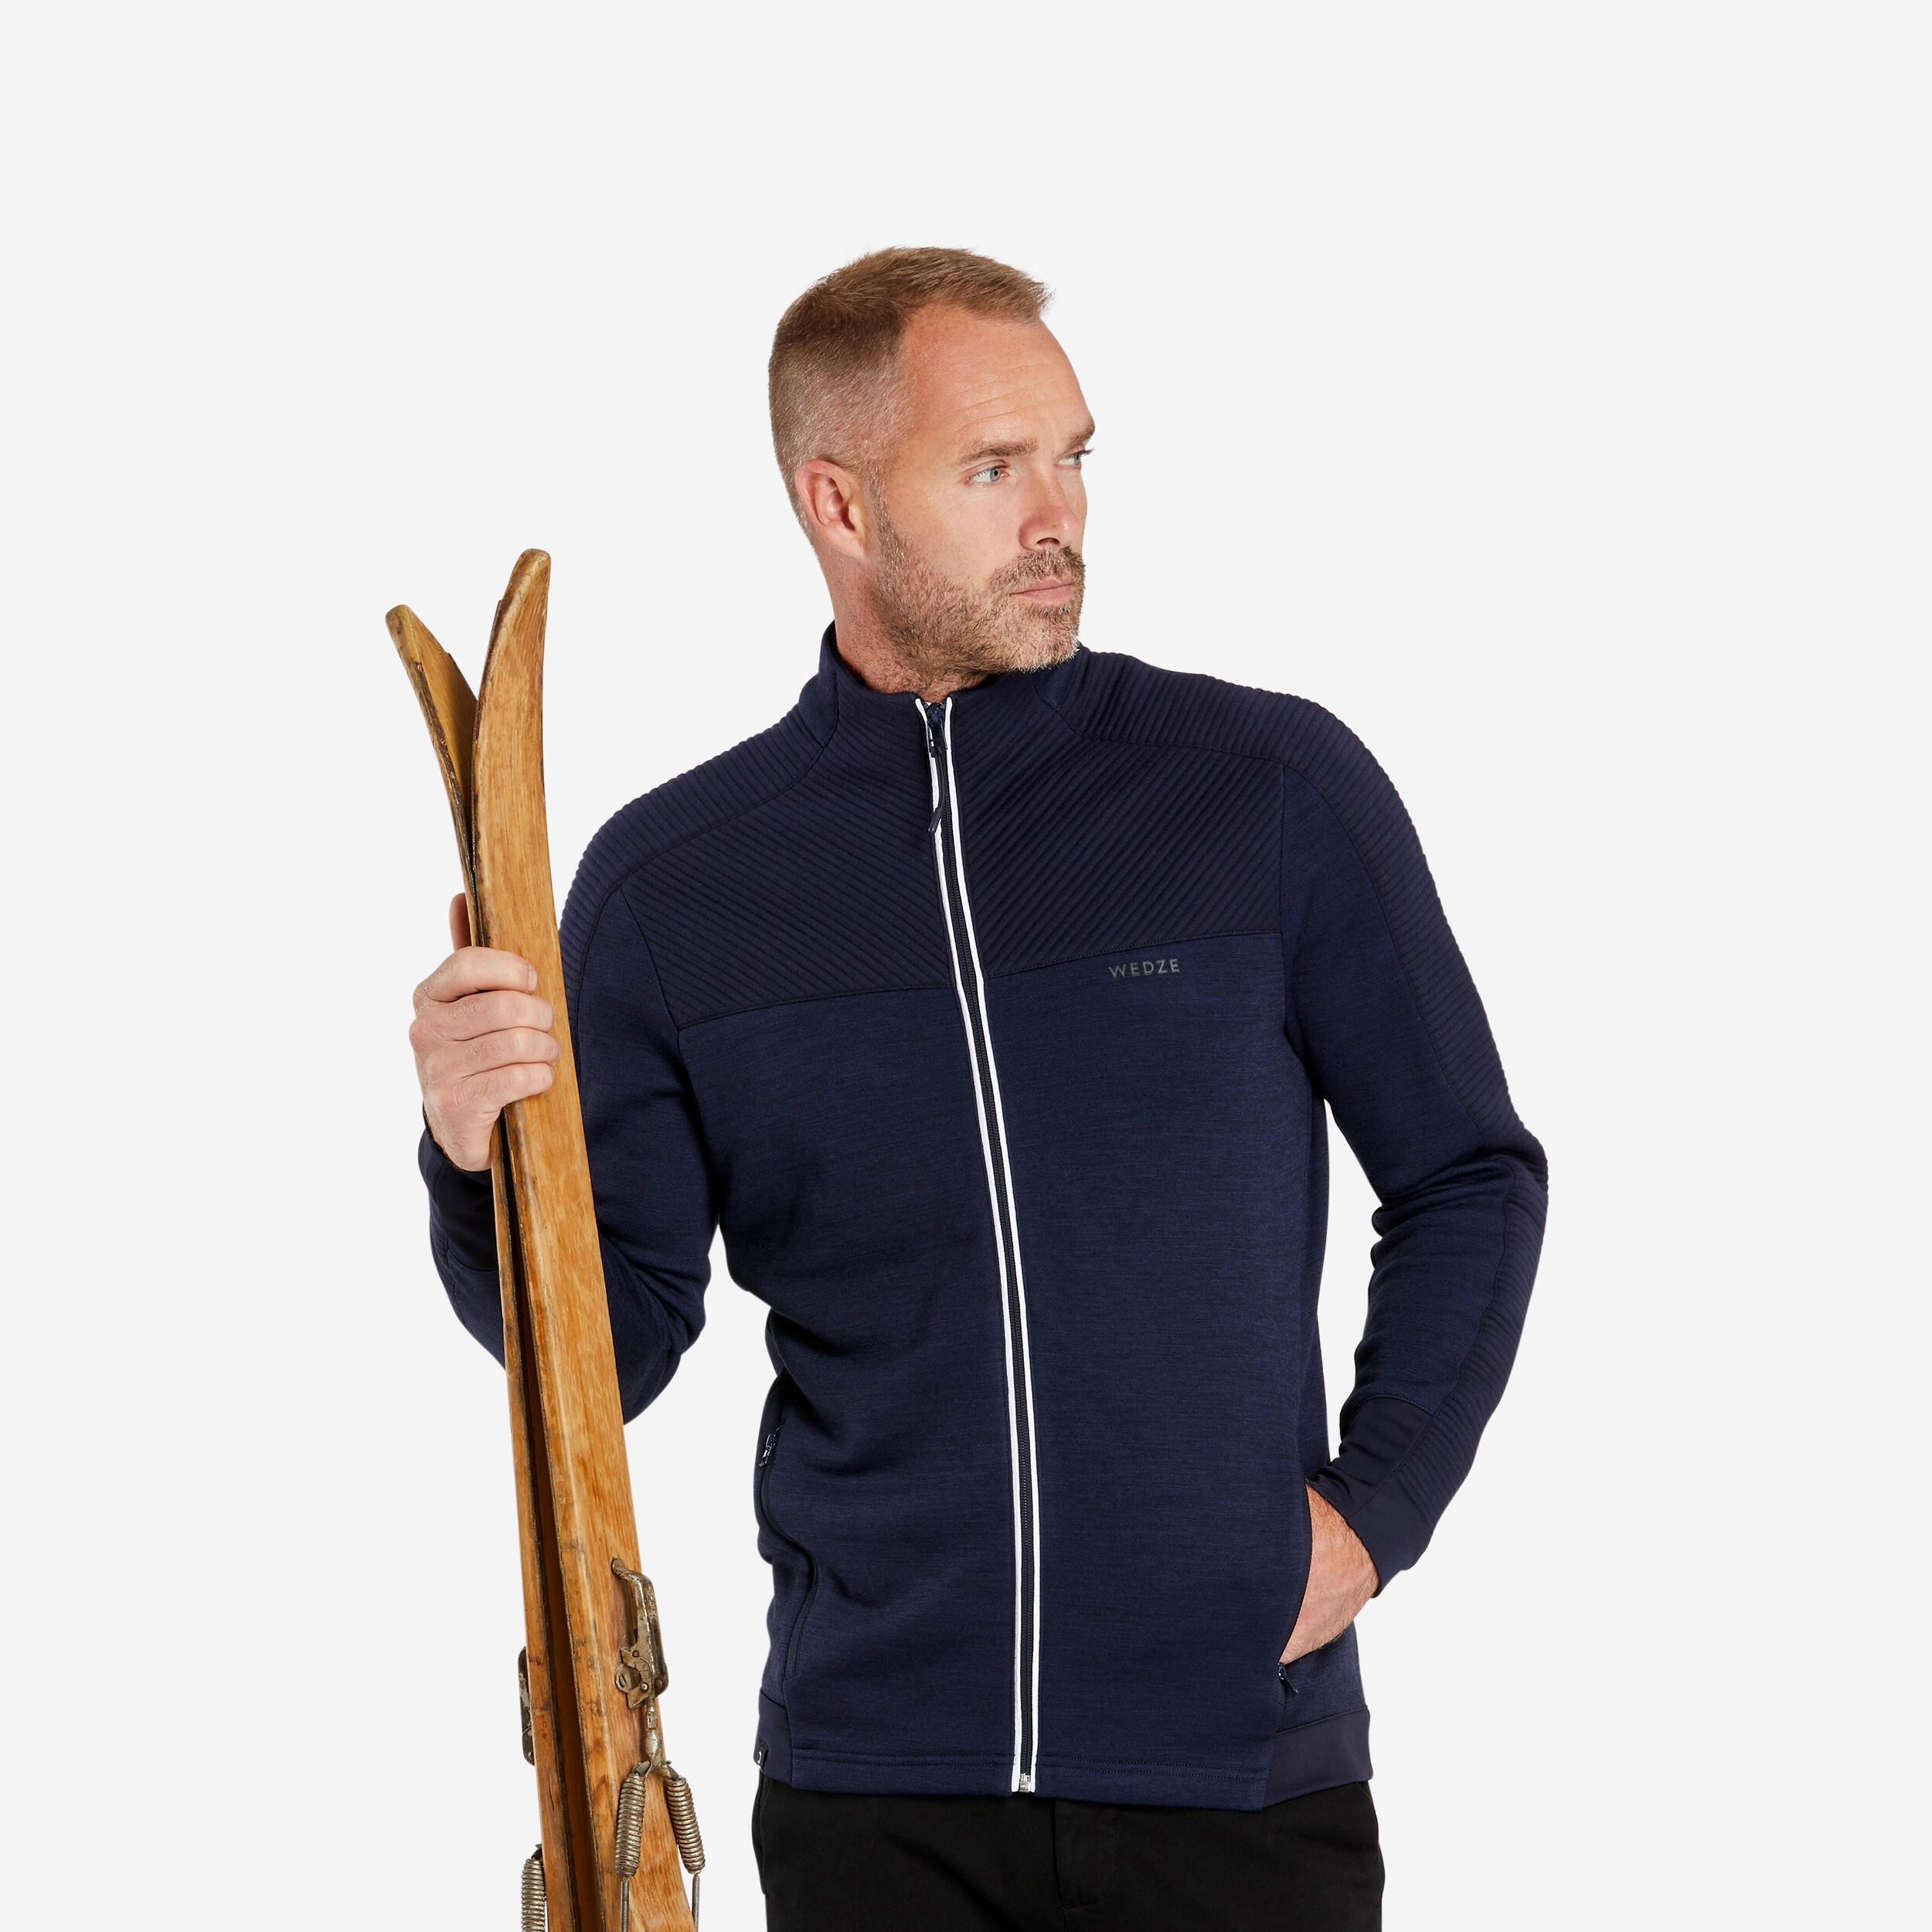 WEDZE Men’s Fleece Merino Wool Ski Jacket - 500 Warm - Navy/White